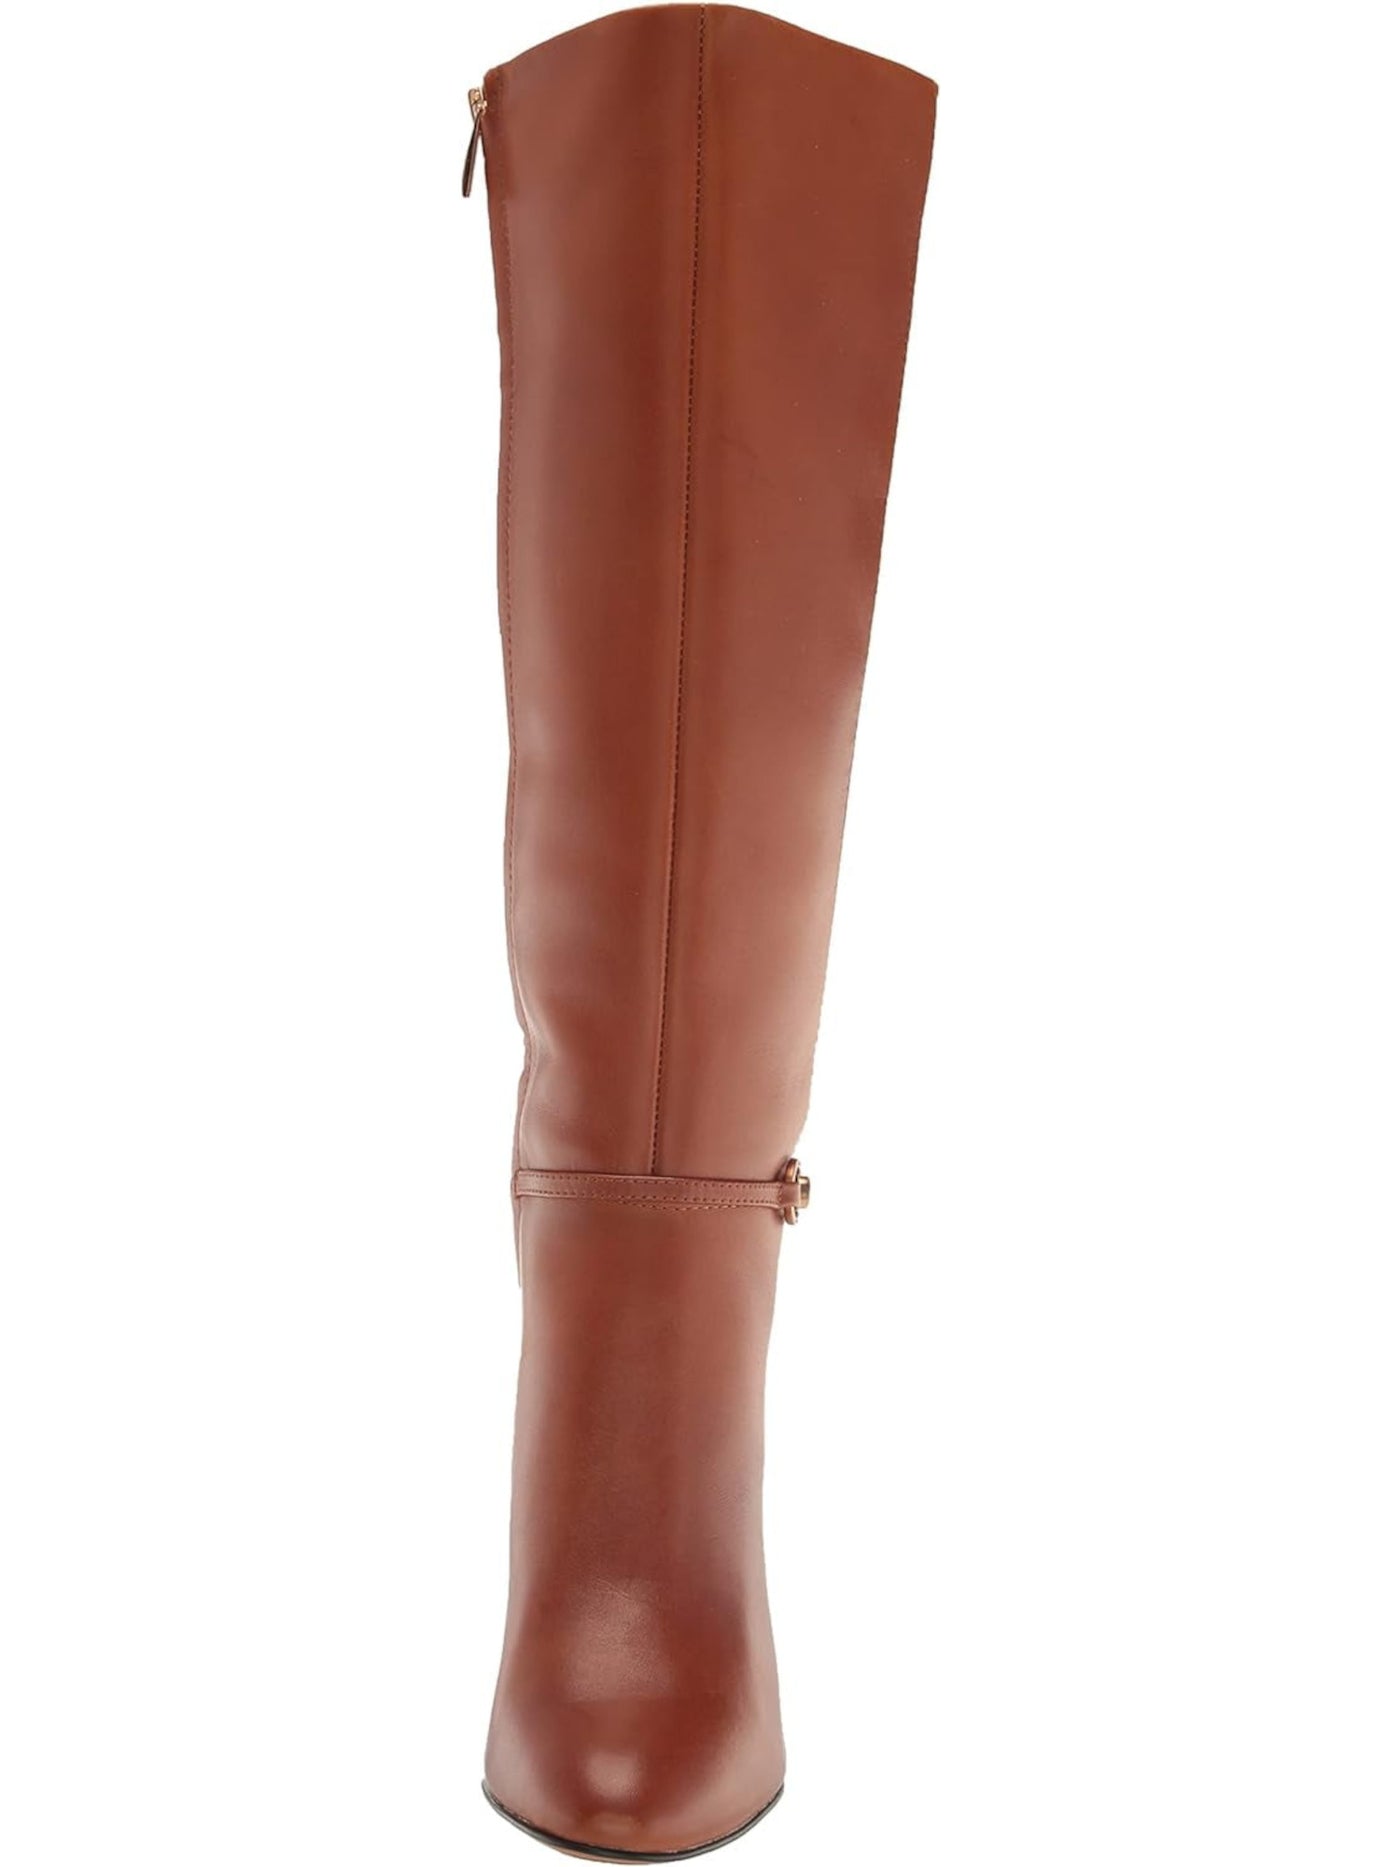 FRANCO SARTO Womens Brown Comfort Palermo Almond Toe Block Heel Zip-Up Leather Dress Boots 9.5 M